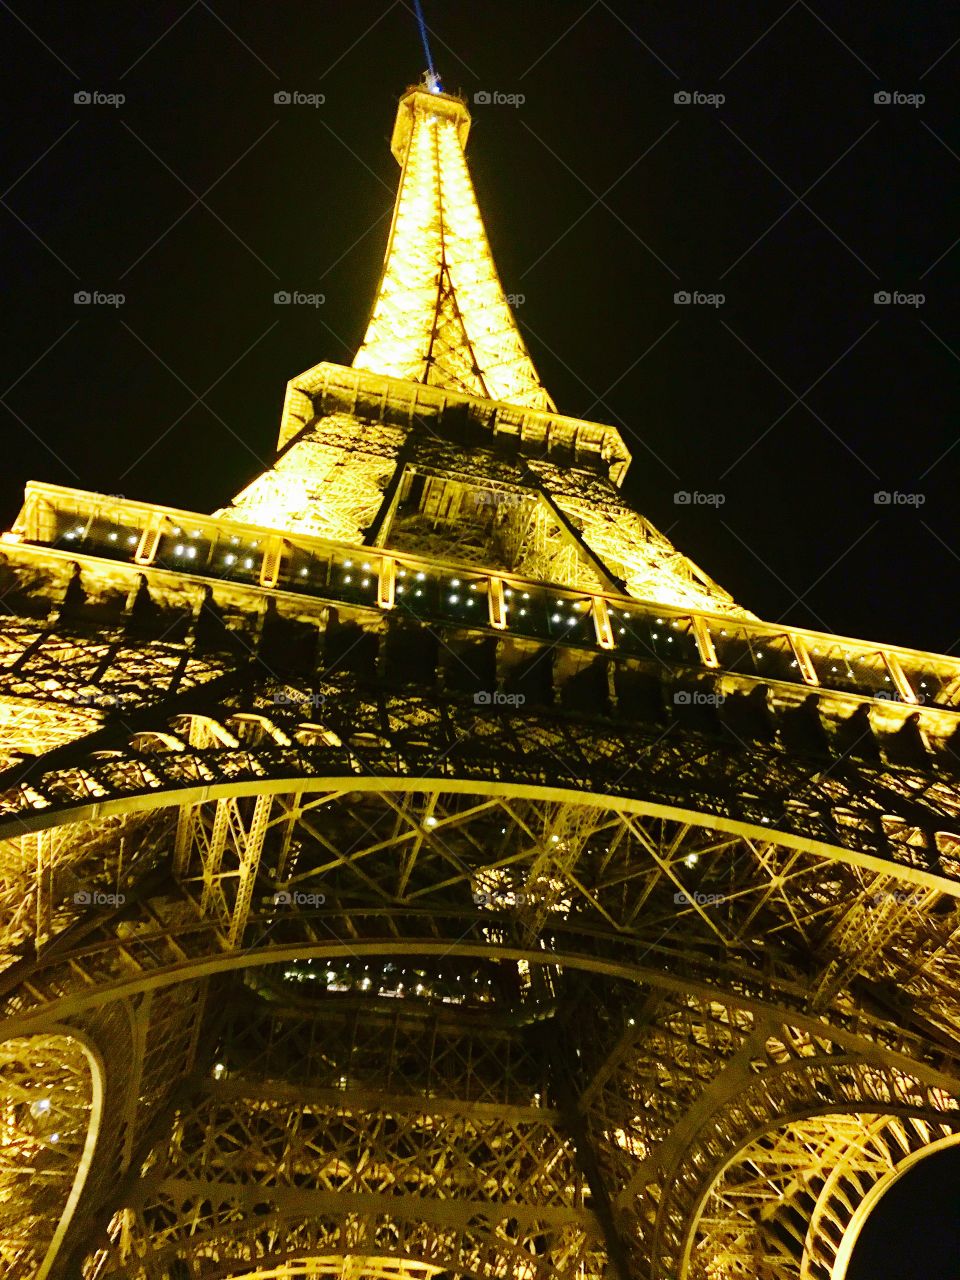 Eiffel Tower last midnight